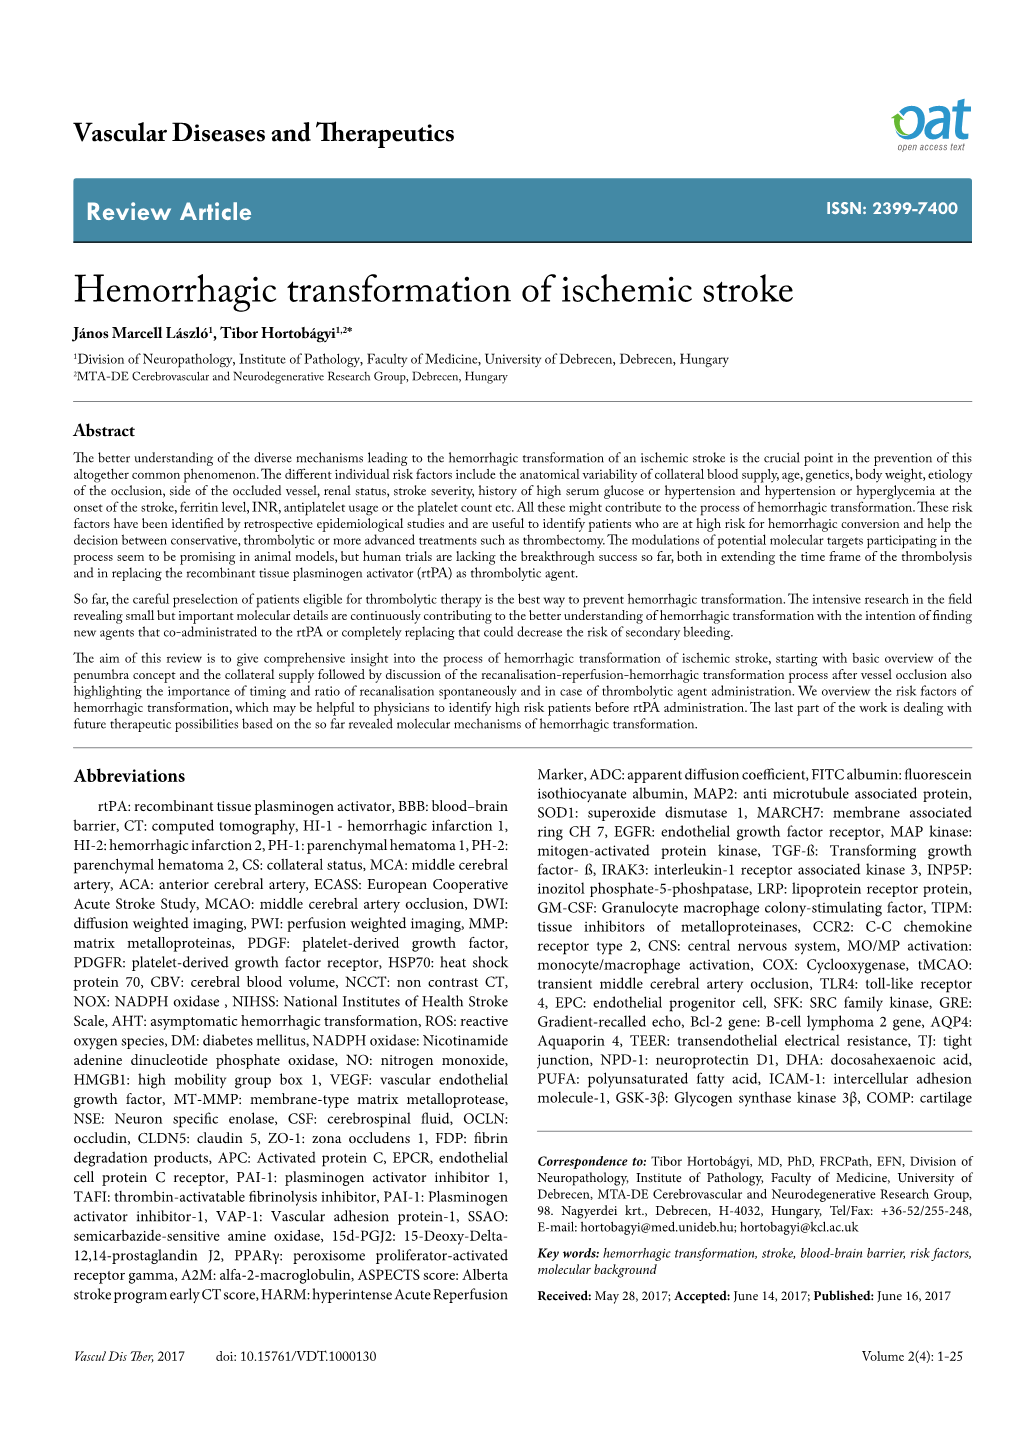 Hemorrhagic Transformation of Ischemic Stroke